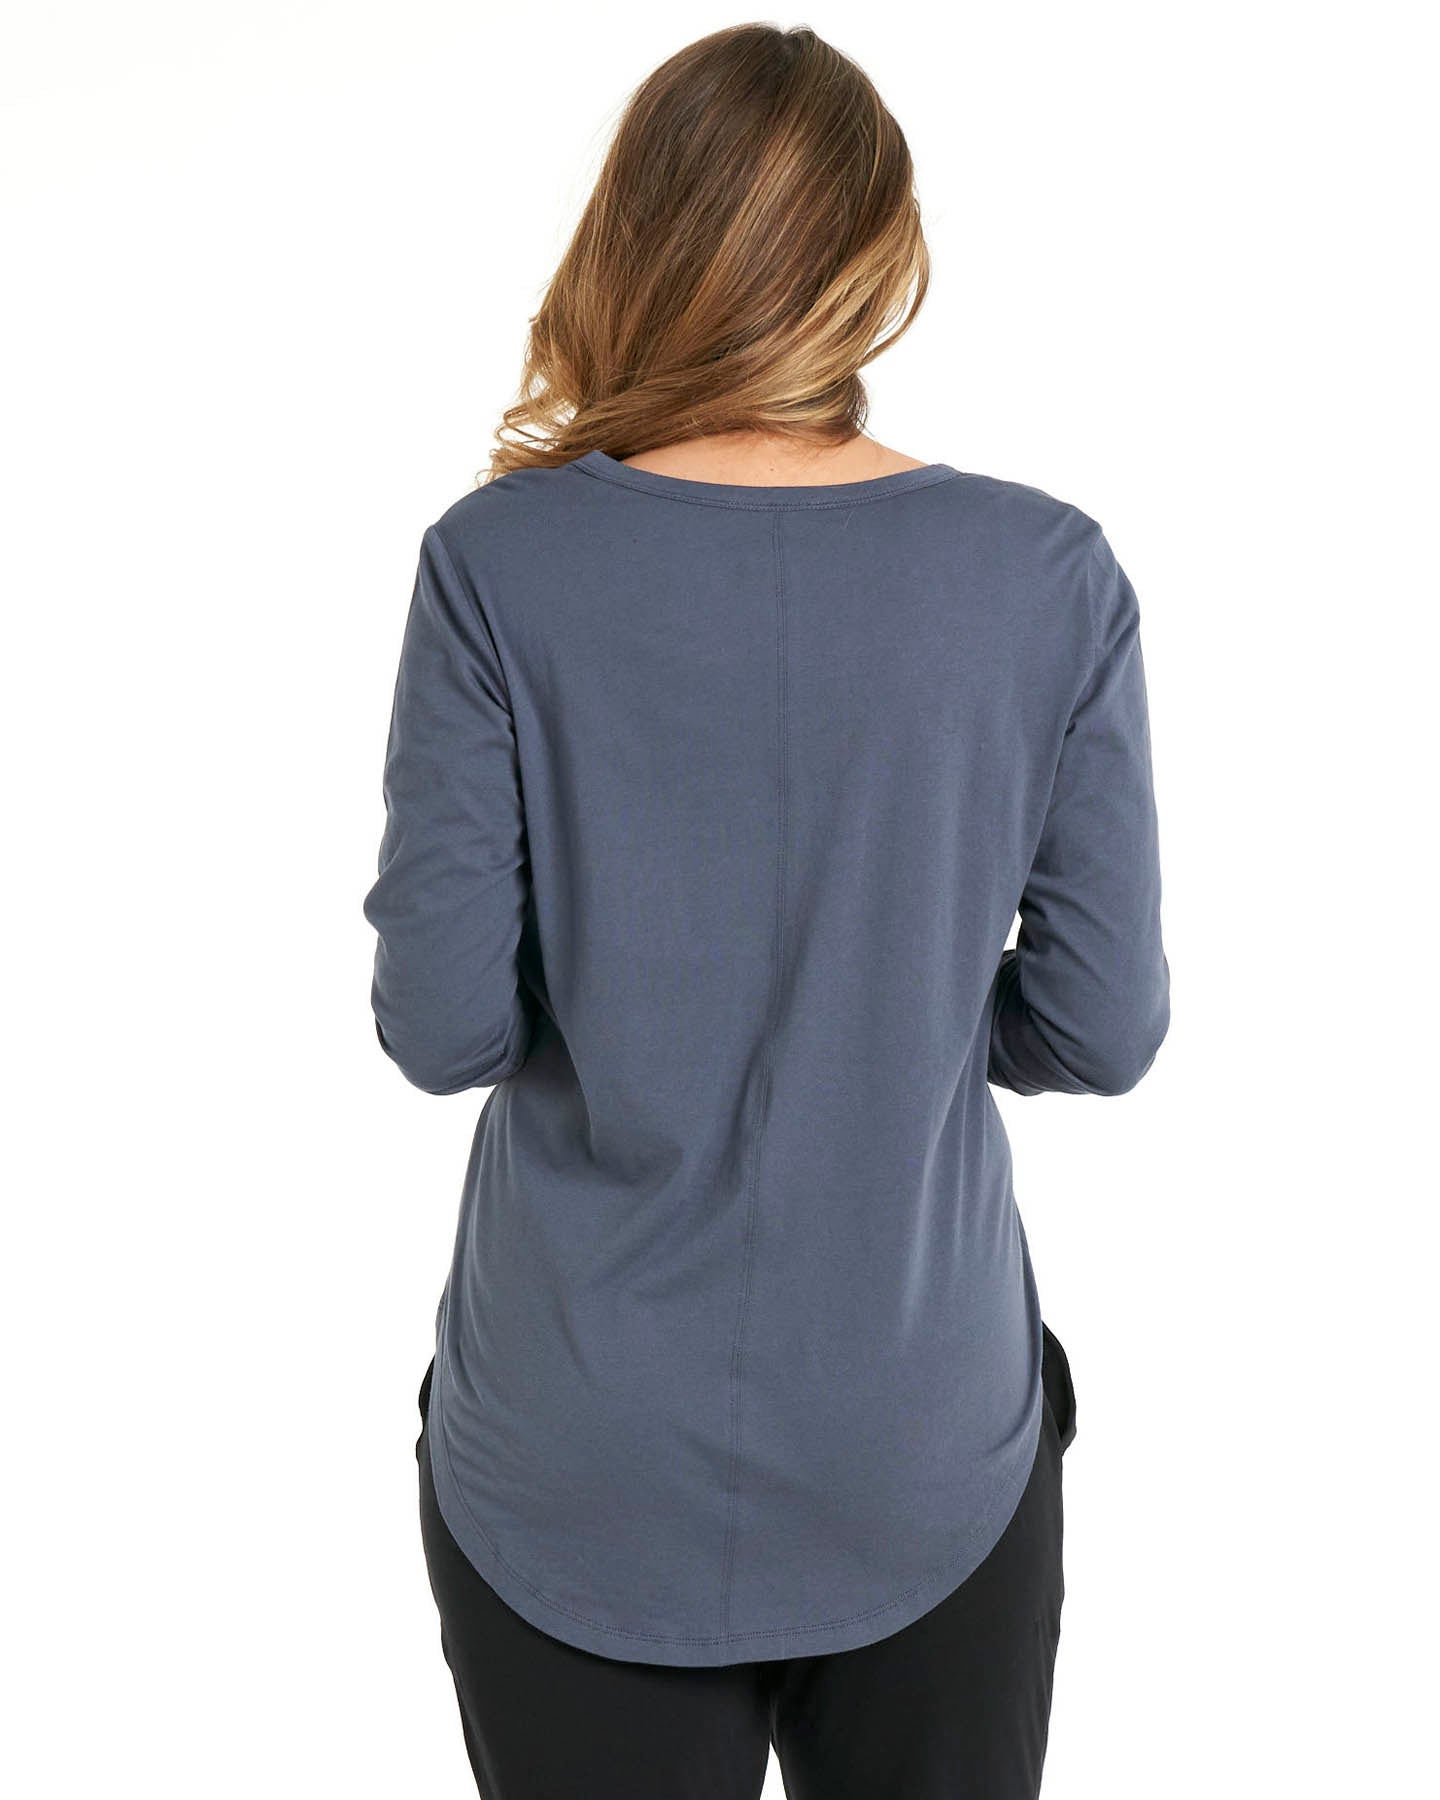 Megan Long Sleeve Cotton Basic Top - Indi Blue